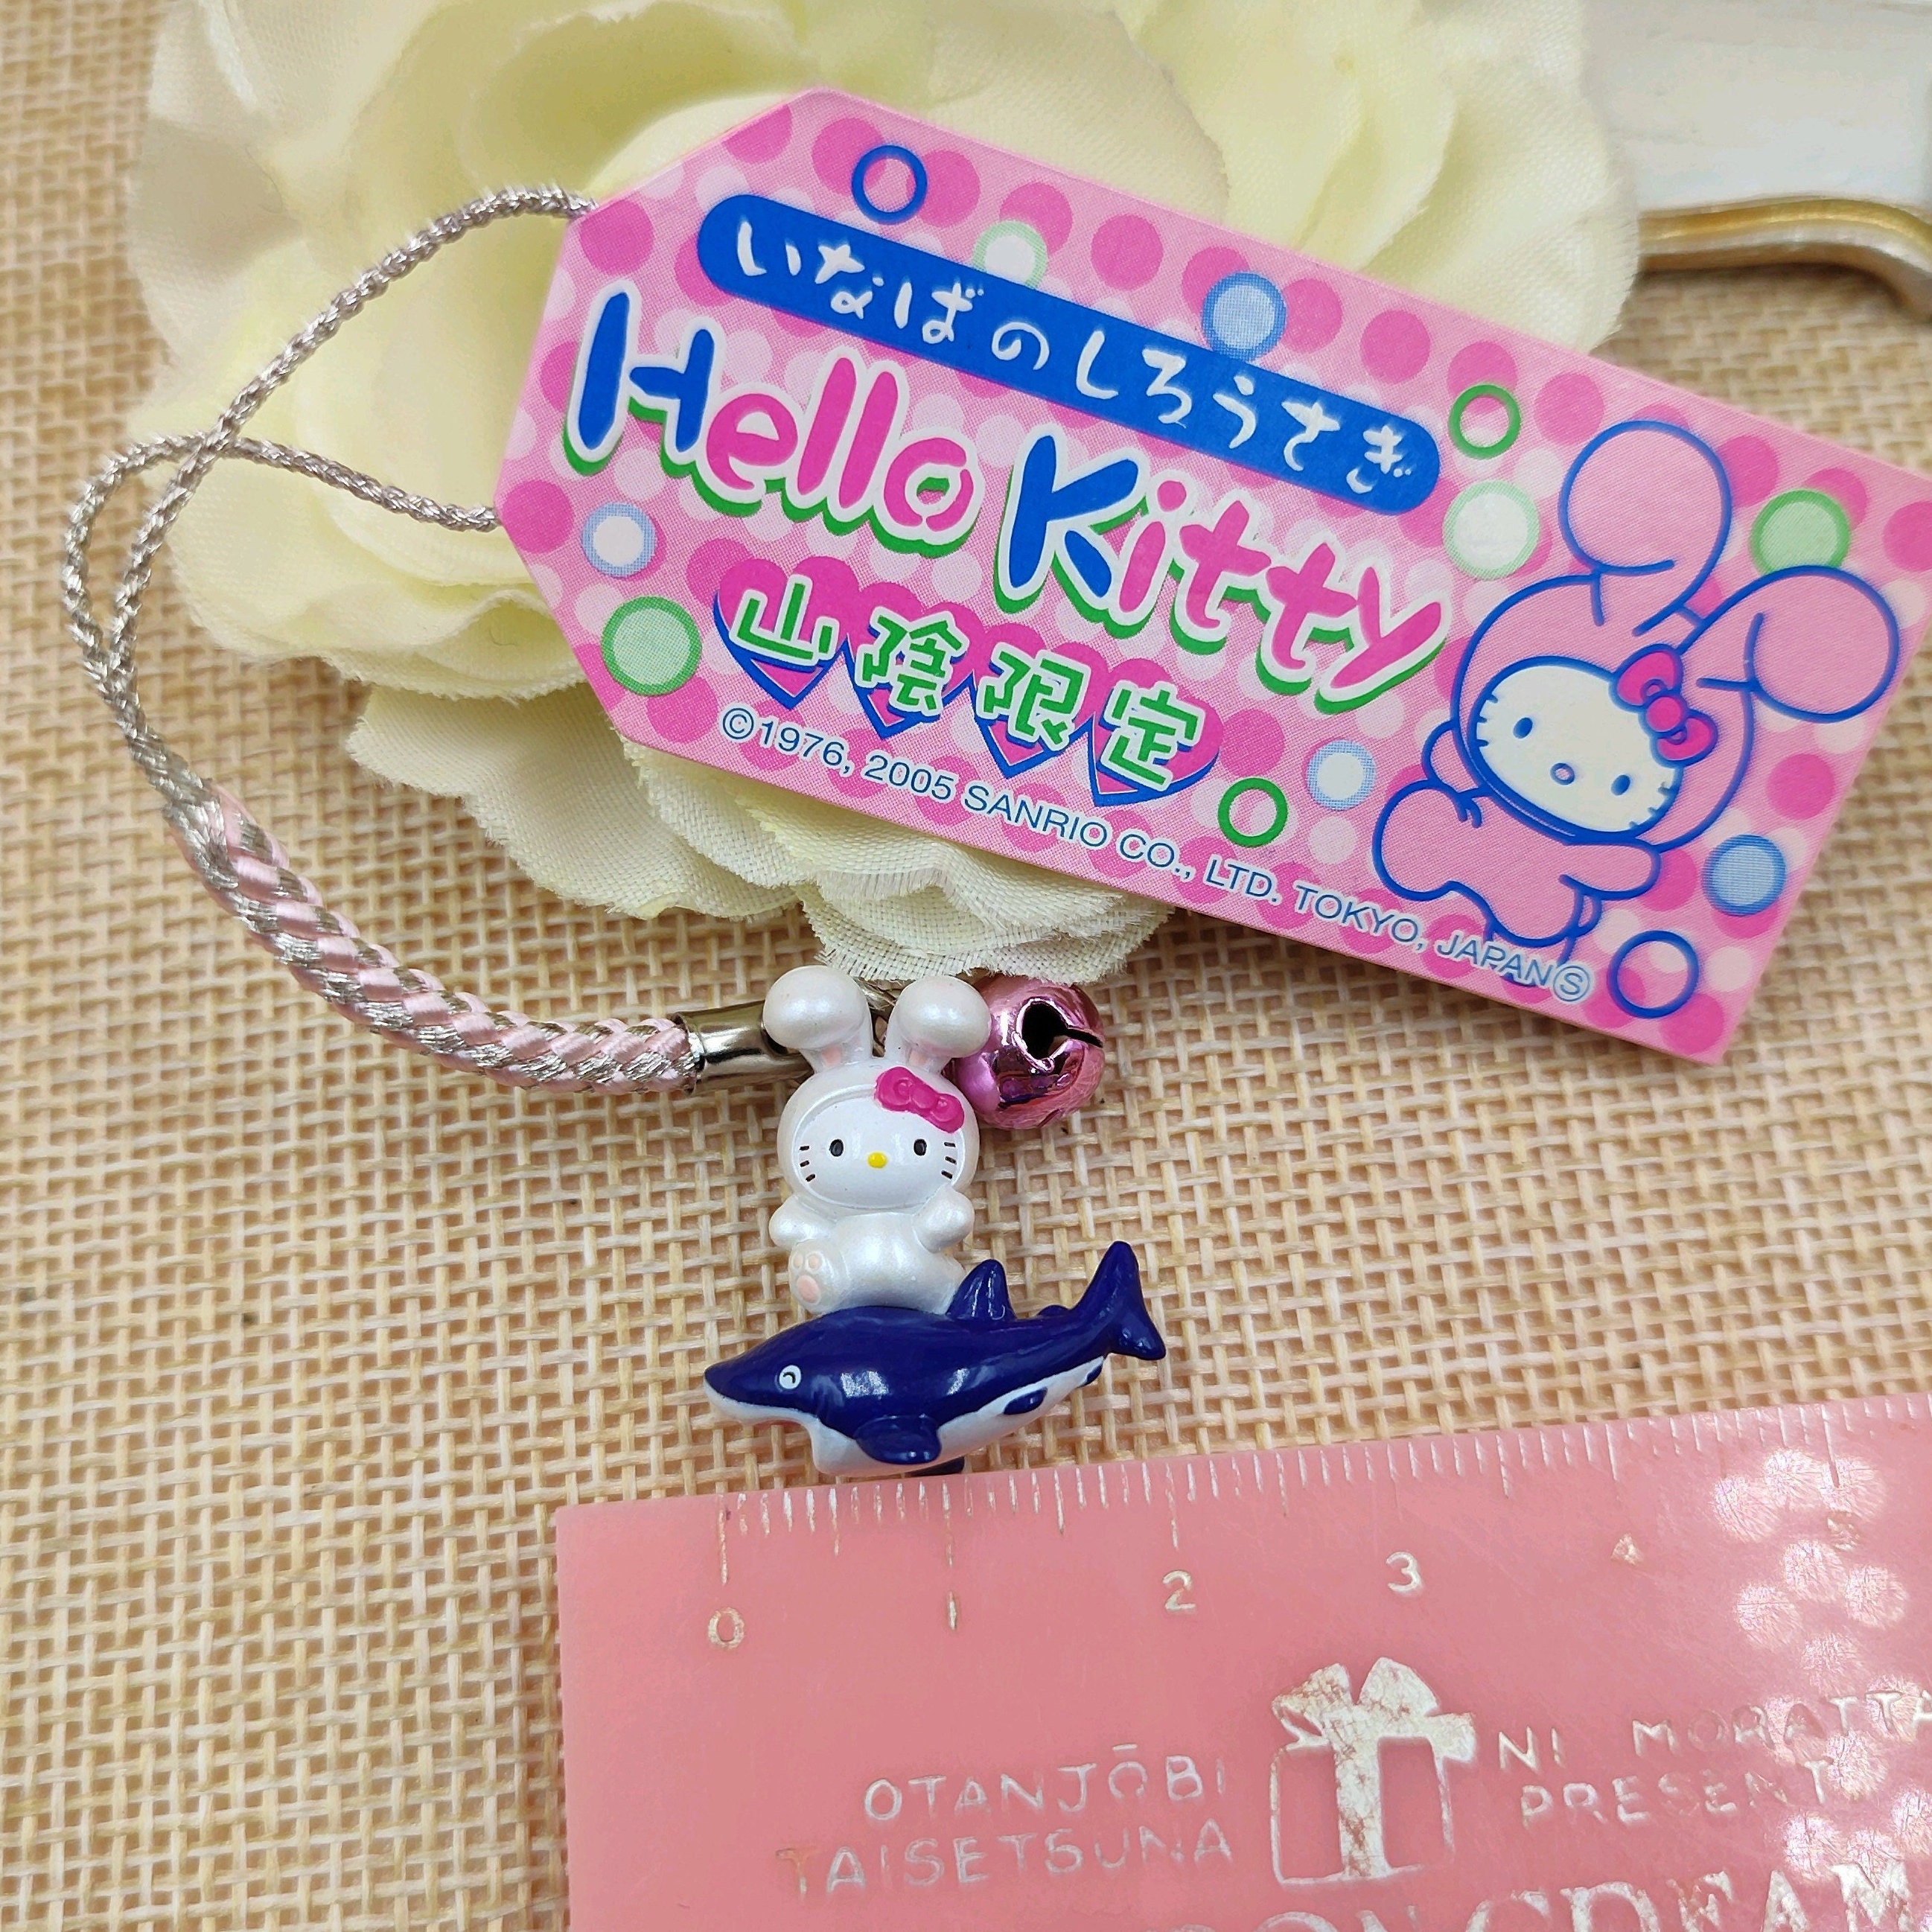  Lot of 10 Pcs Mixed Hello Kitty Cell Phone Pendant